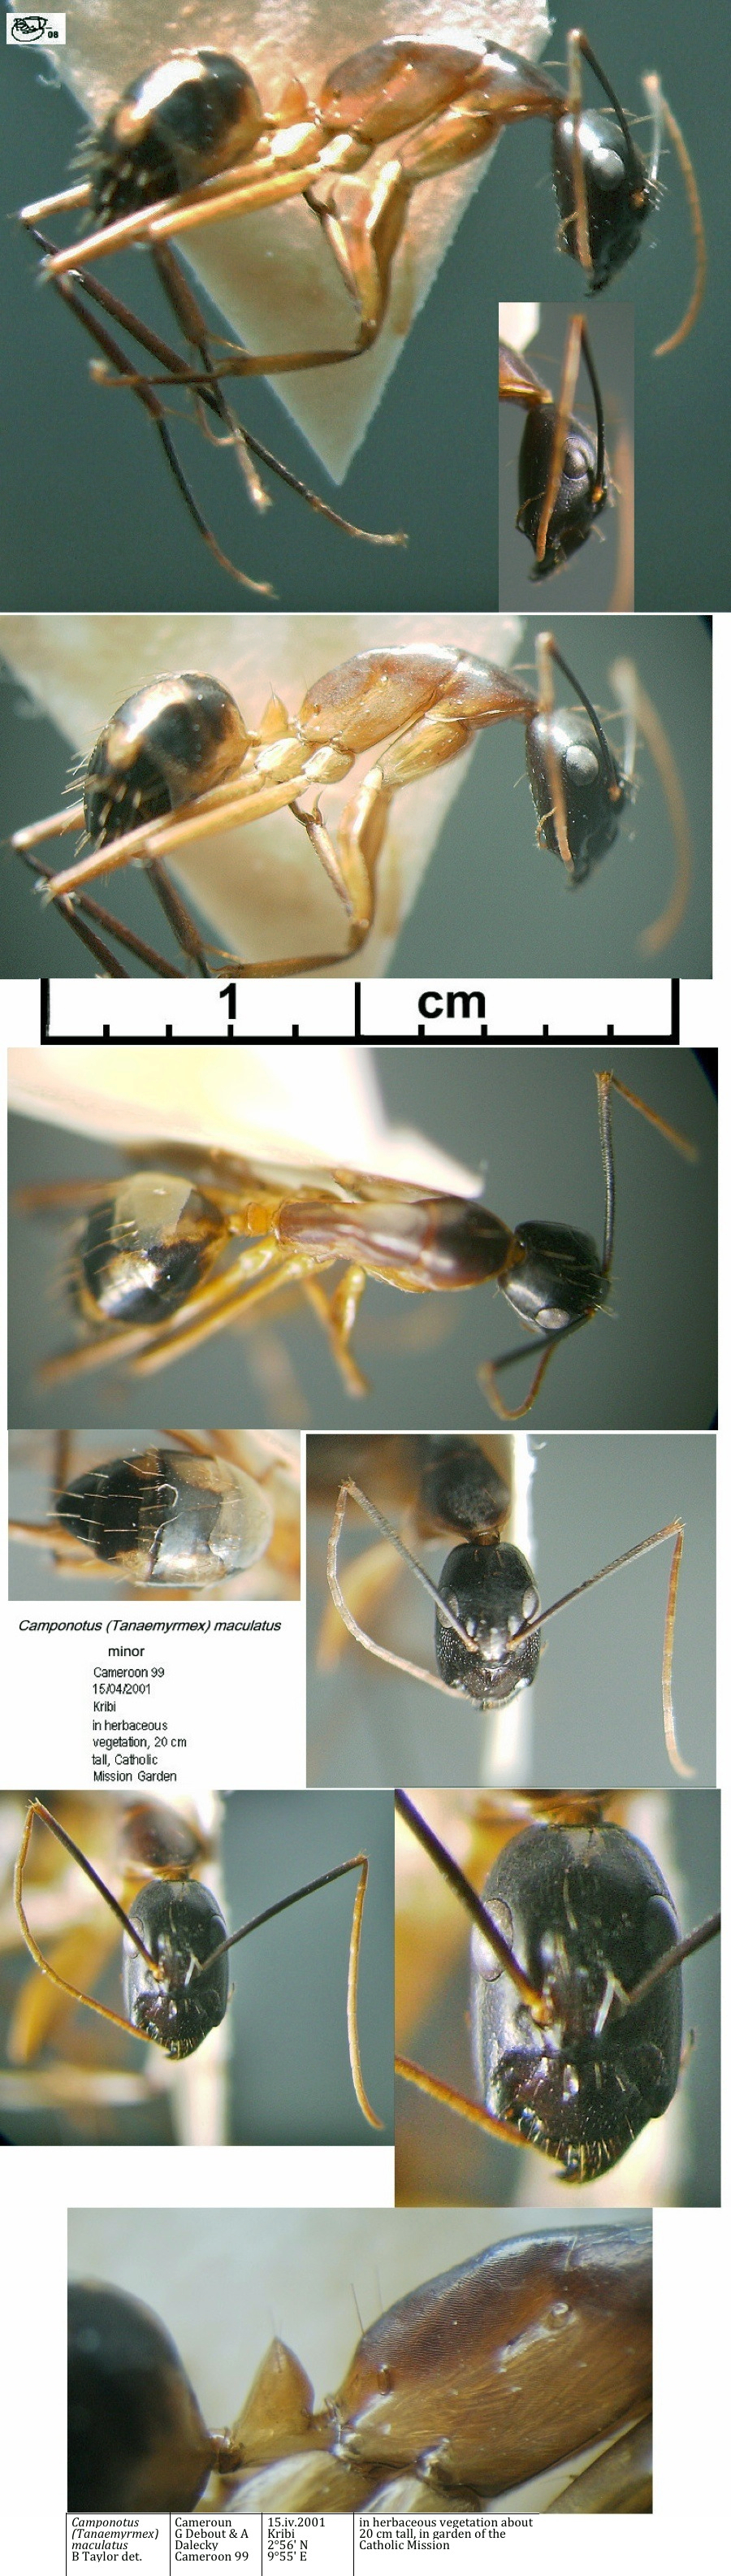 {Camponotus maculatus minor Cameroun 99}